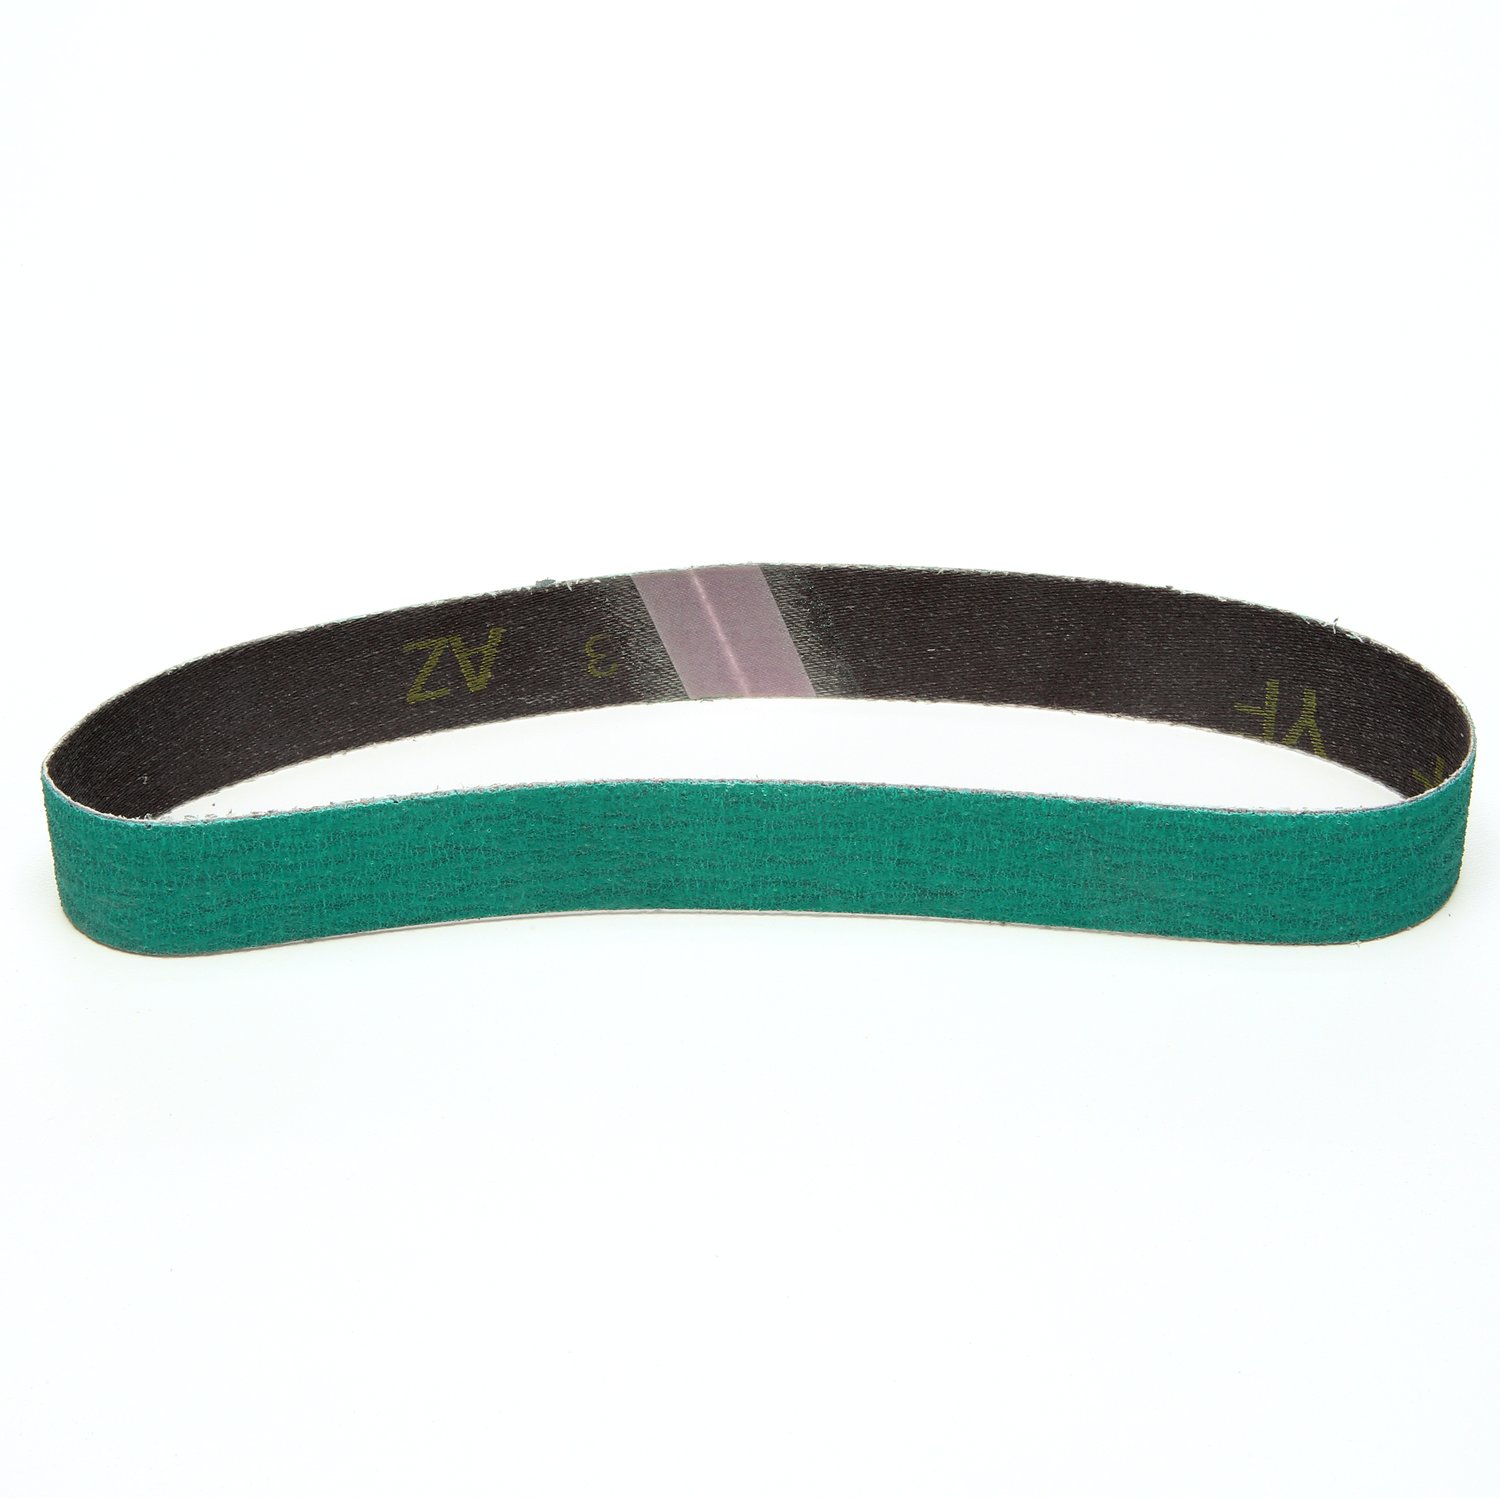 7010536730 - 3M Cloth Belt 577F, 36 YF-weight, 1 in x 25-1/2 in, Fabri-lok,
Single-flex